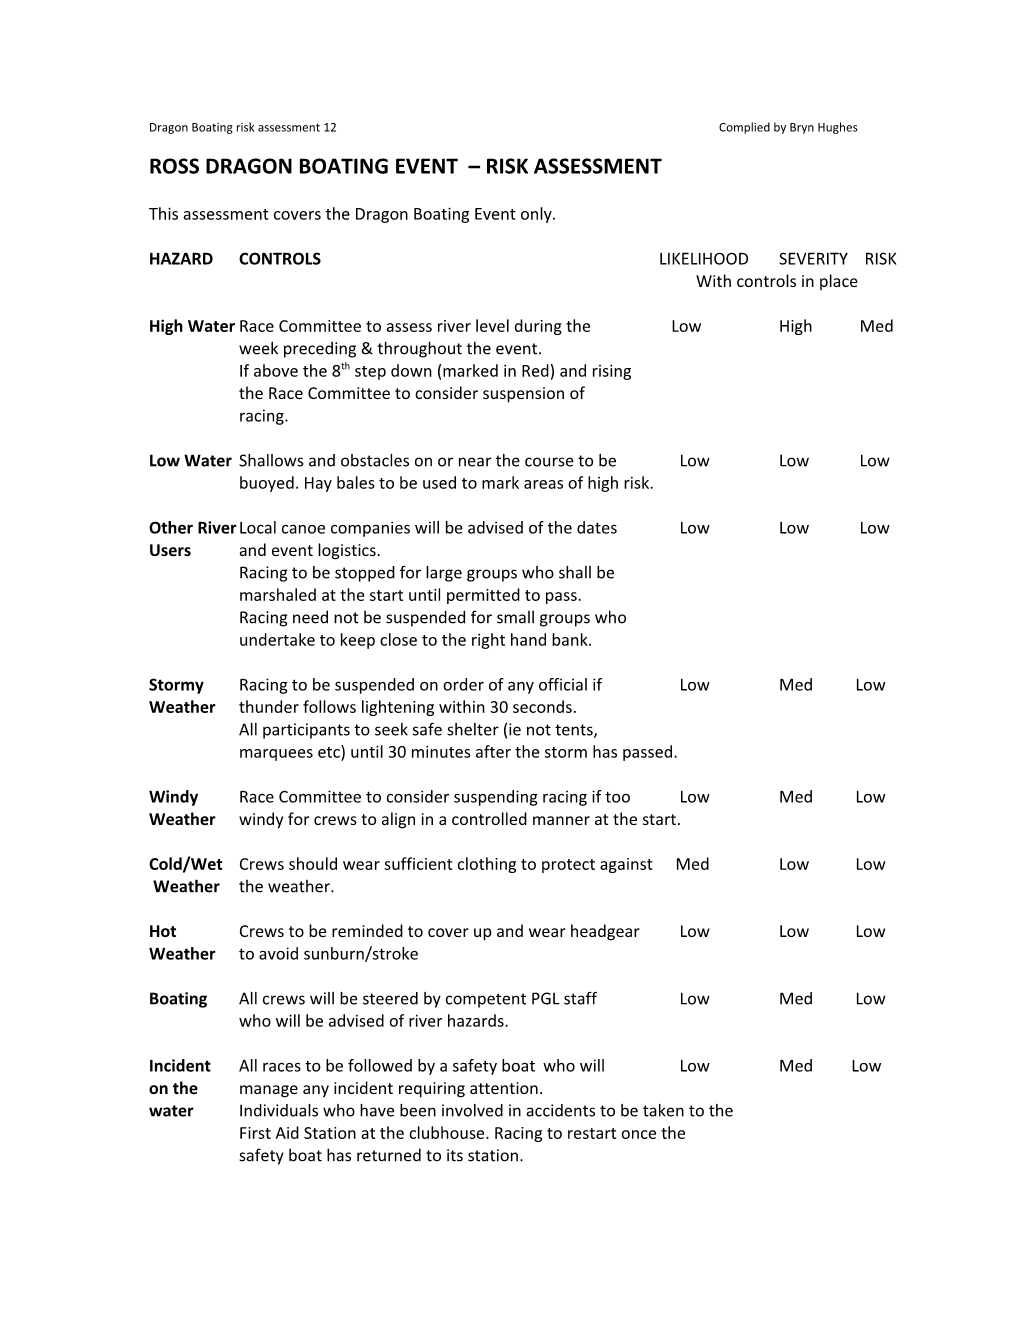 Dragon Boating Risk Assessment 12